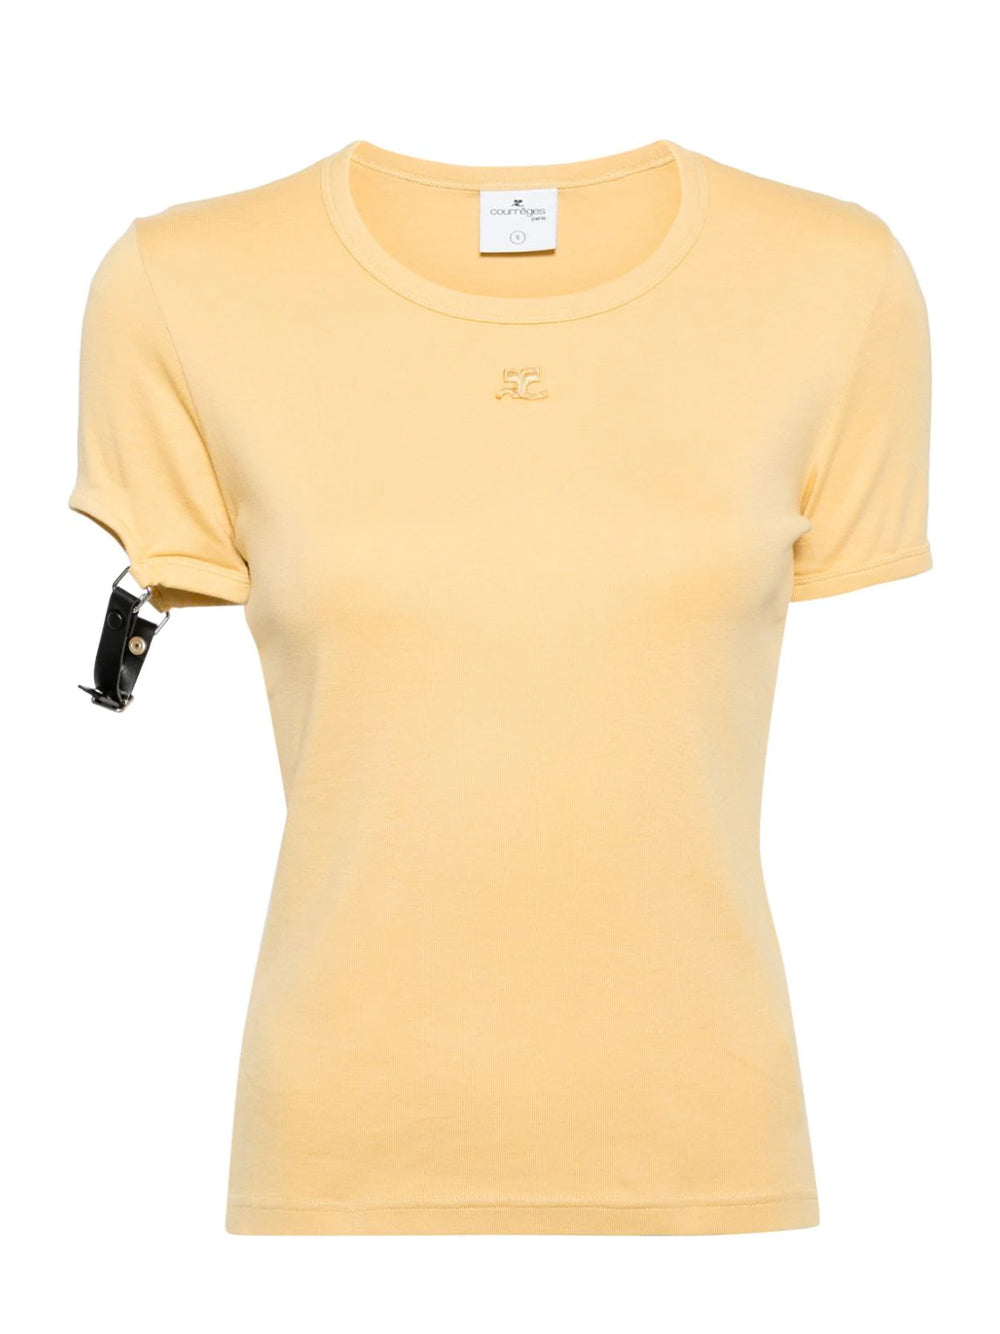 Buckle Contrast T-Shirt (Pollen)